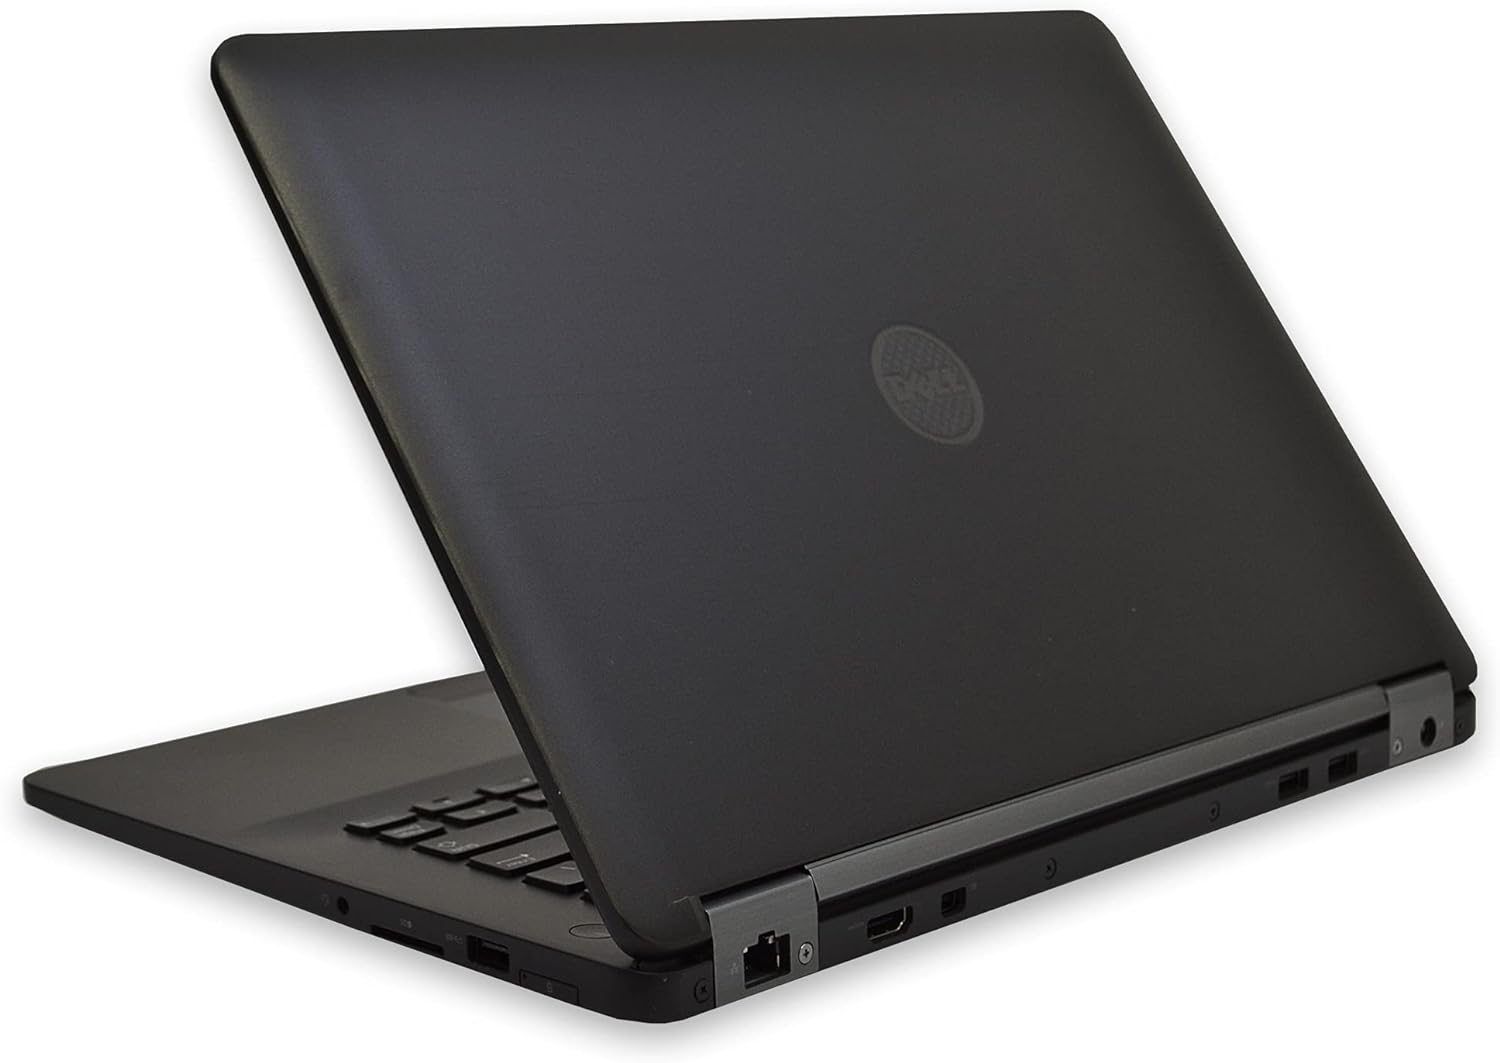 Refurbished Dell Latitude E7450 Laptop Intel Core i5, 8GB Ram, 256GB Solid State, Windows 10 Operating System